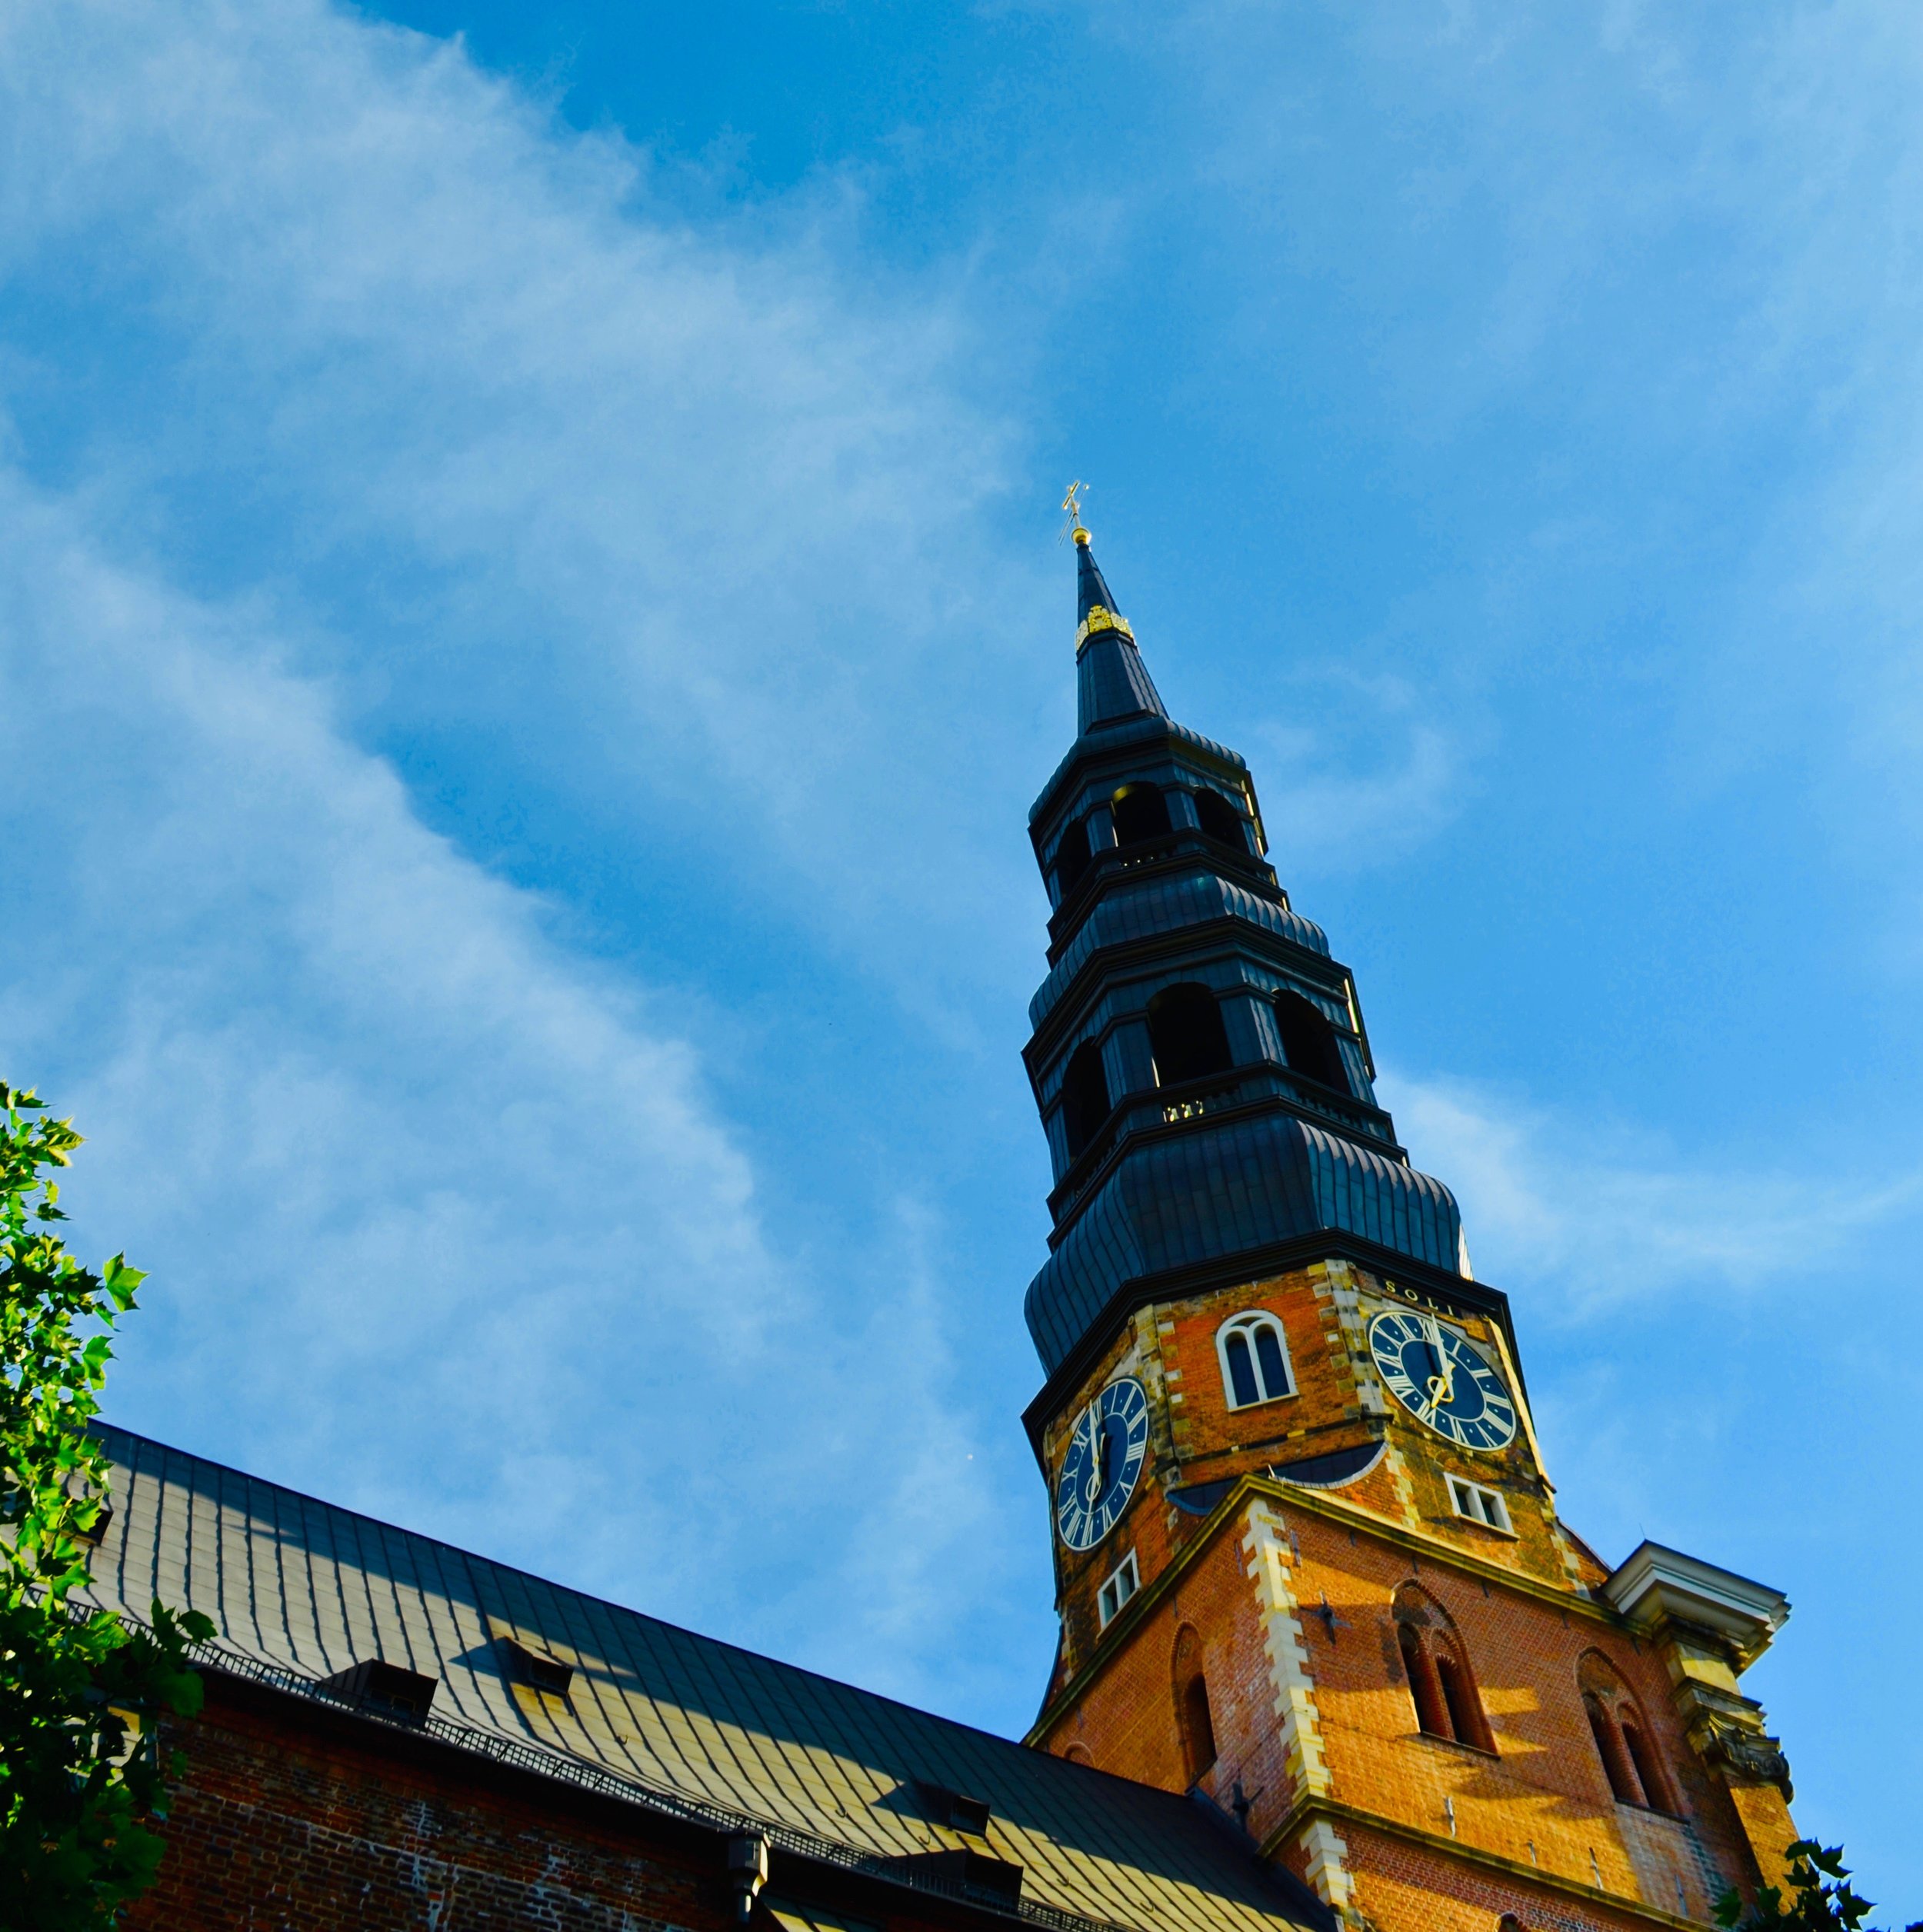  The spire of St. Katharinen, Hamburg.  